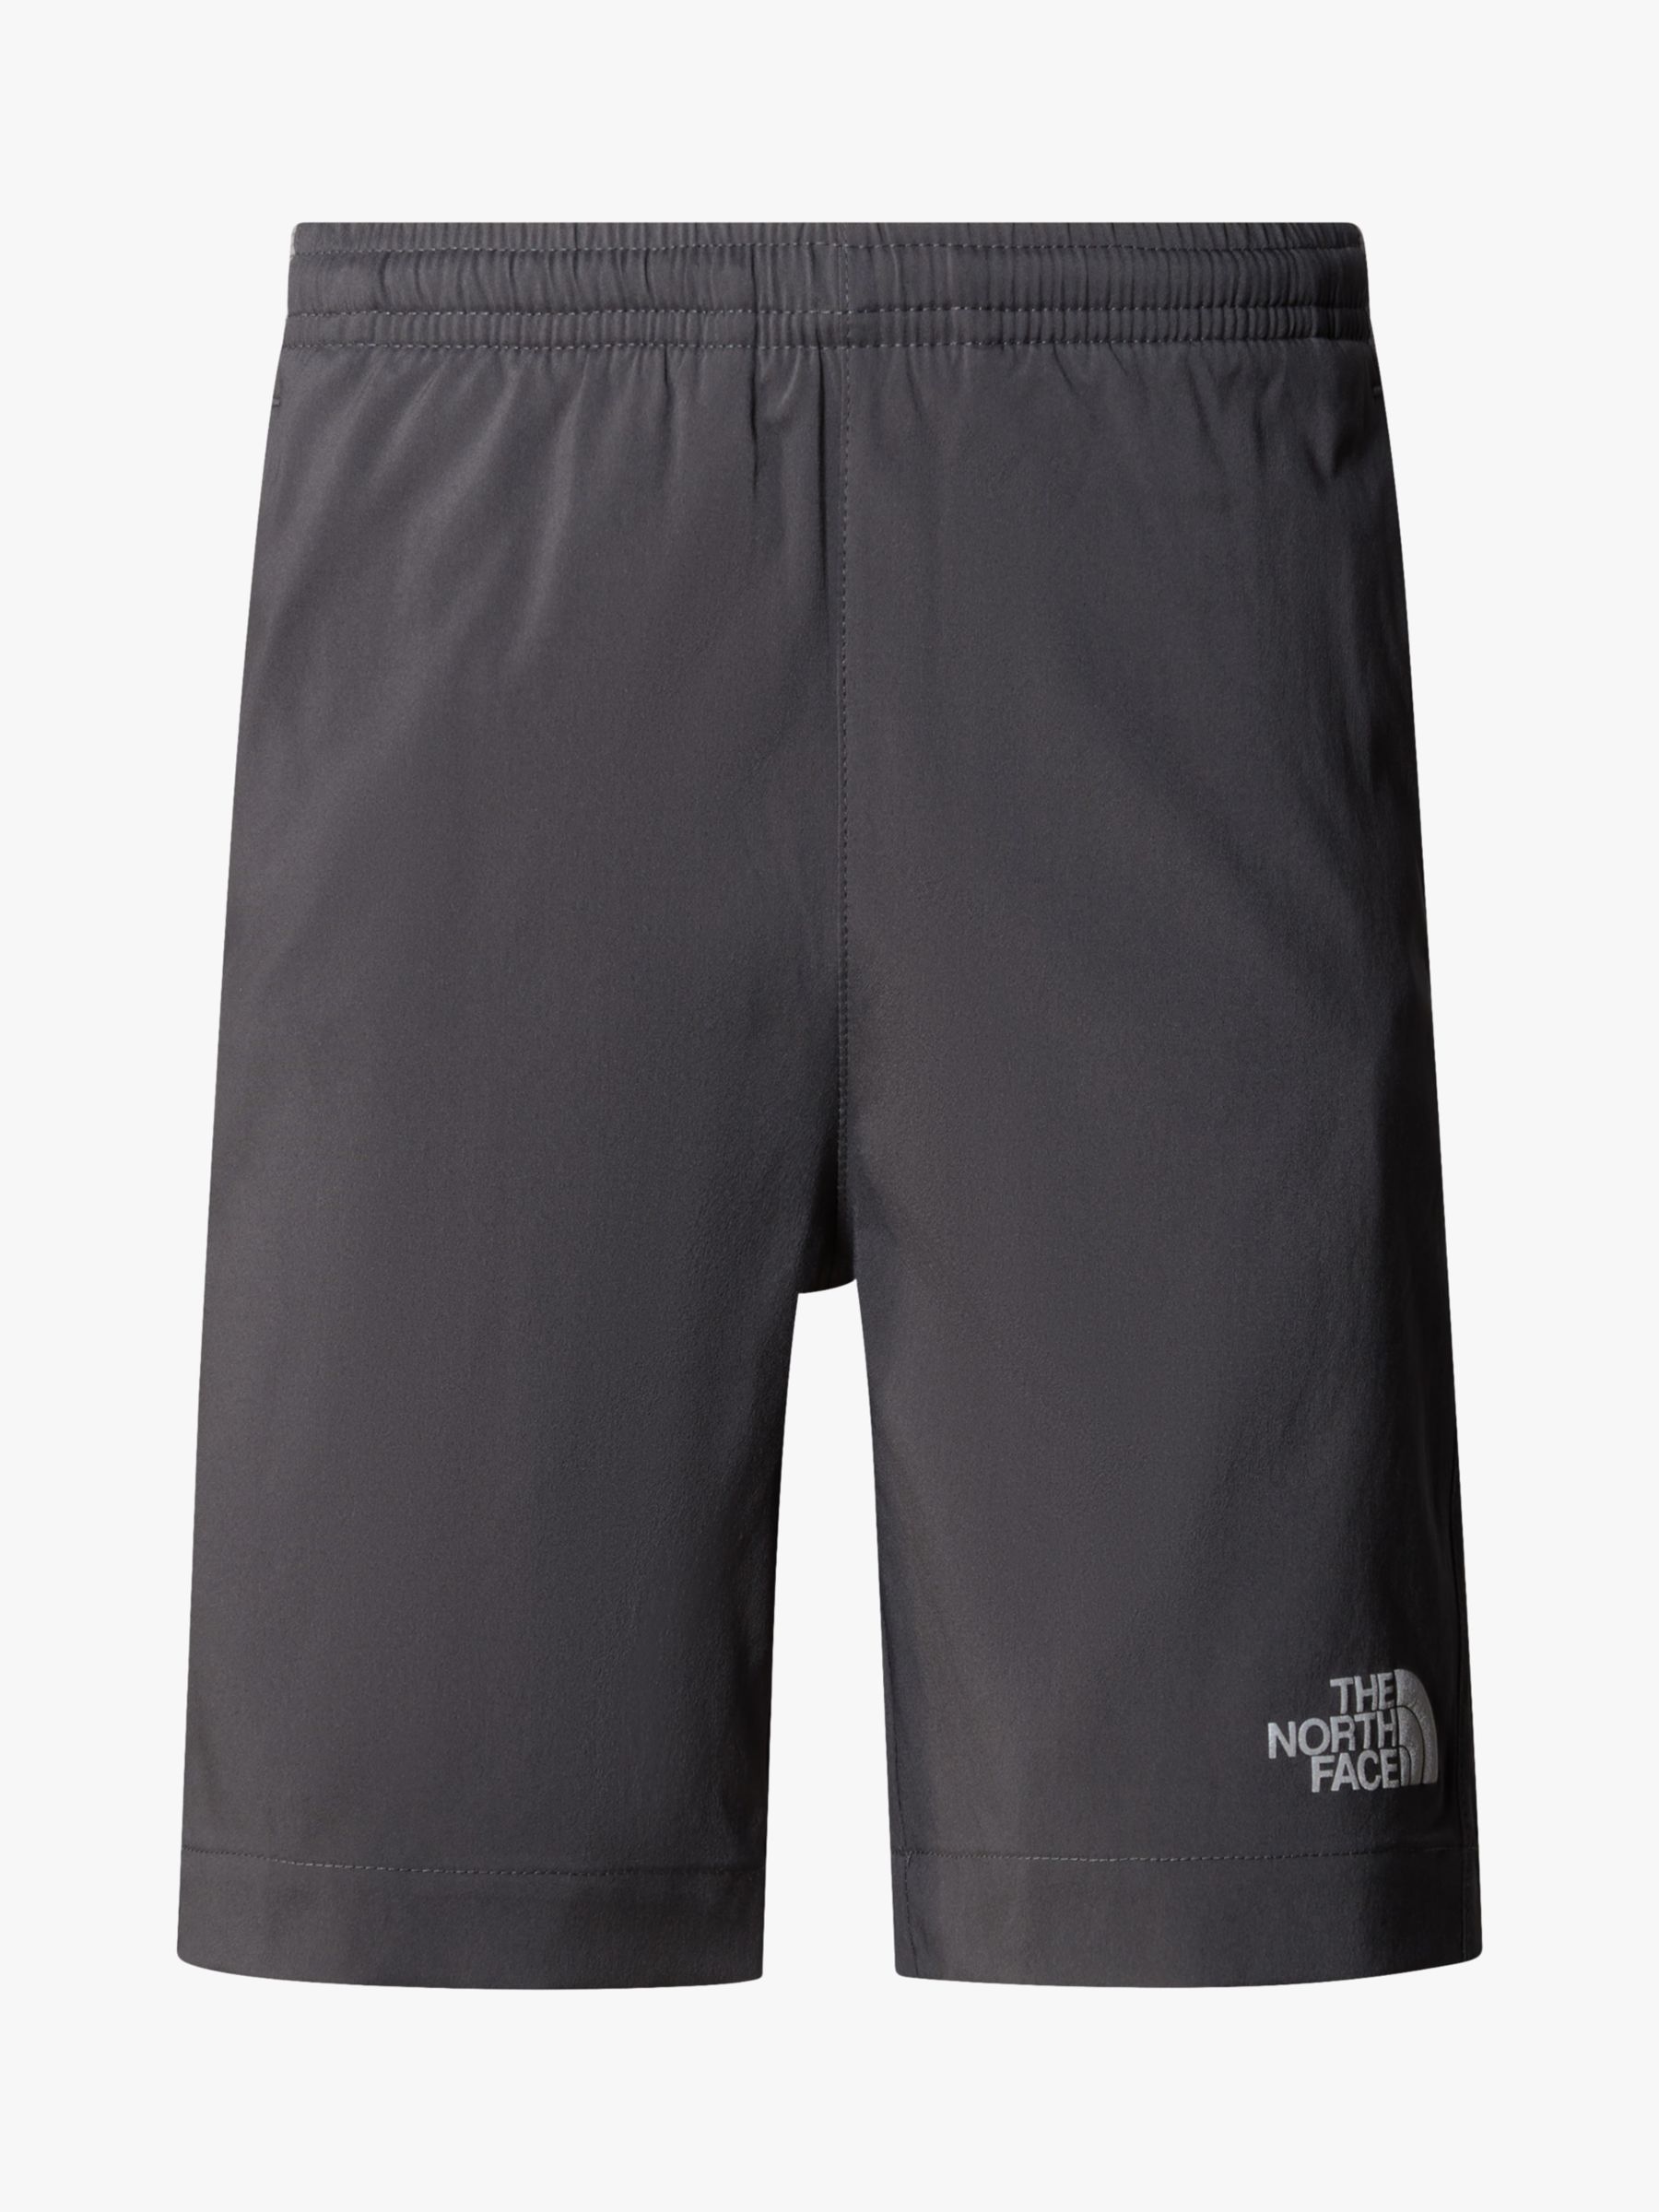 The North Face Kids' Reactor Drawstring Shorts, Asphalt Grey, XL